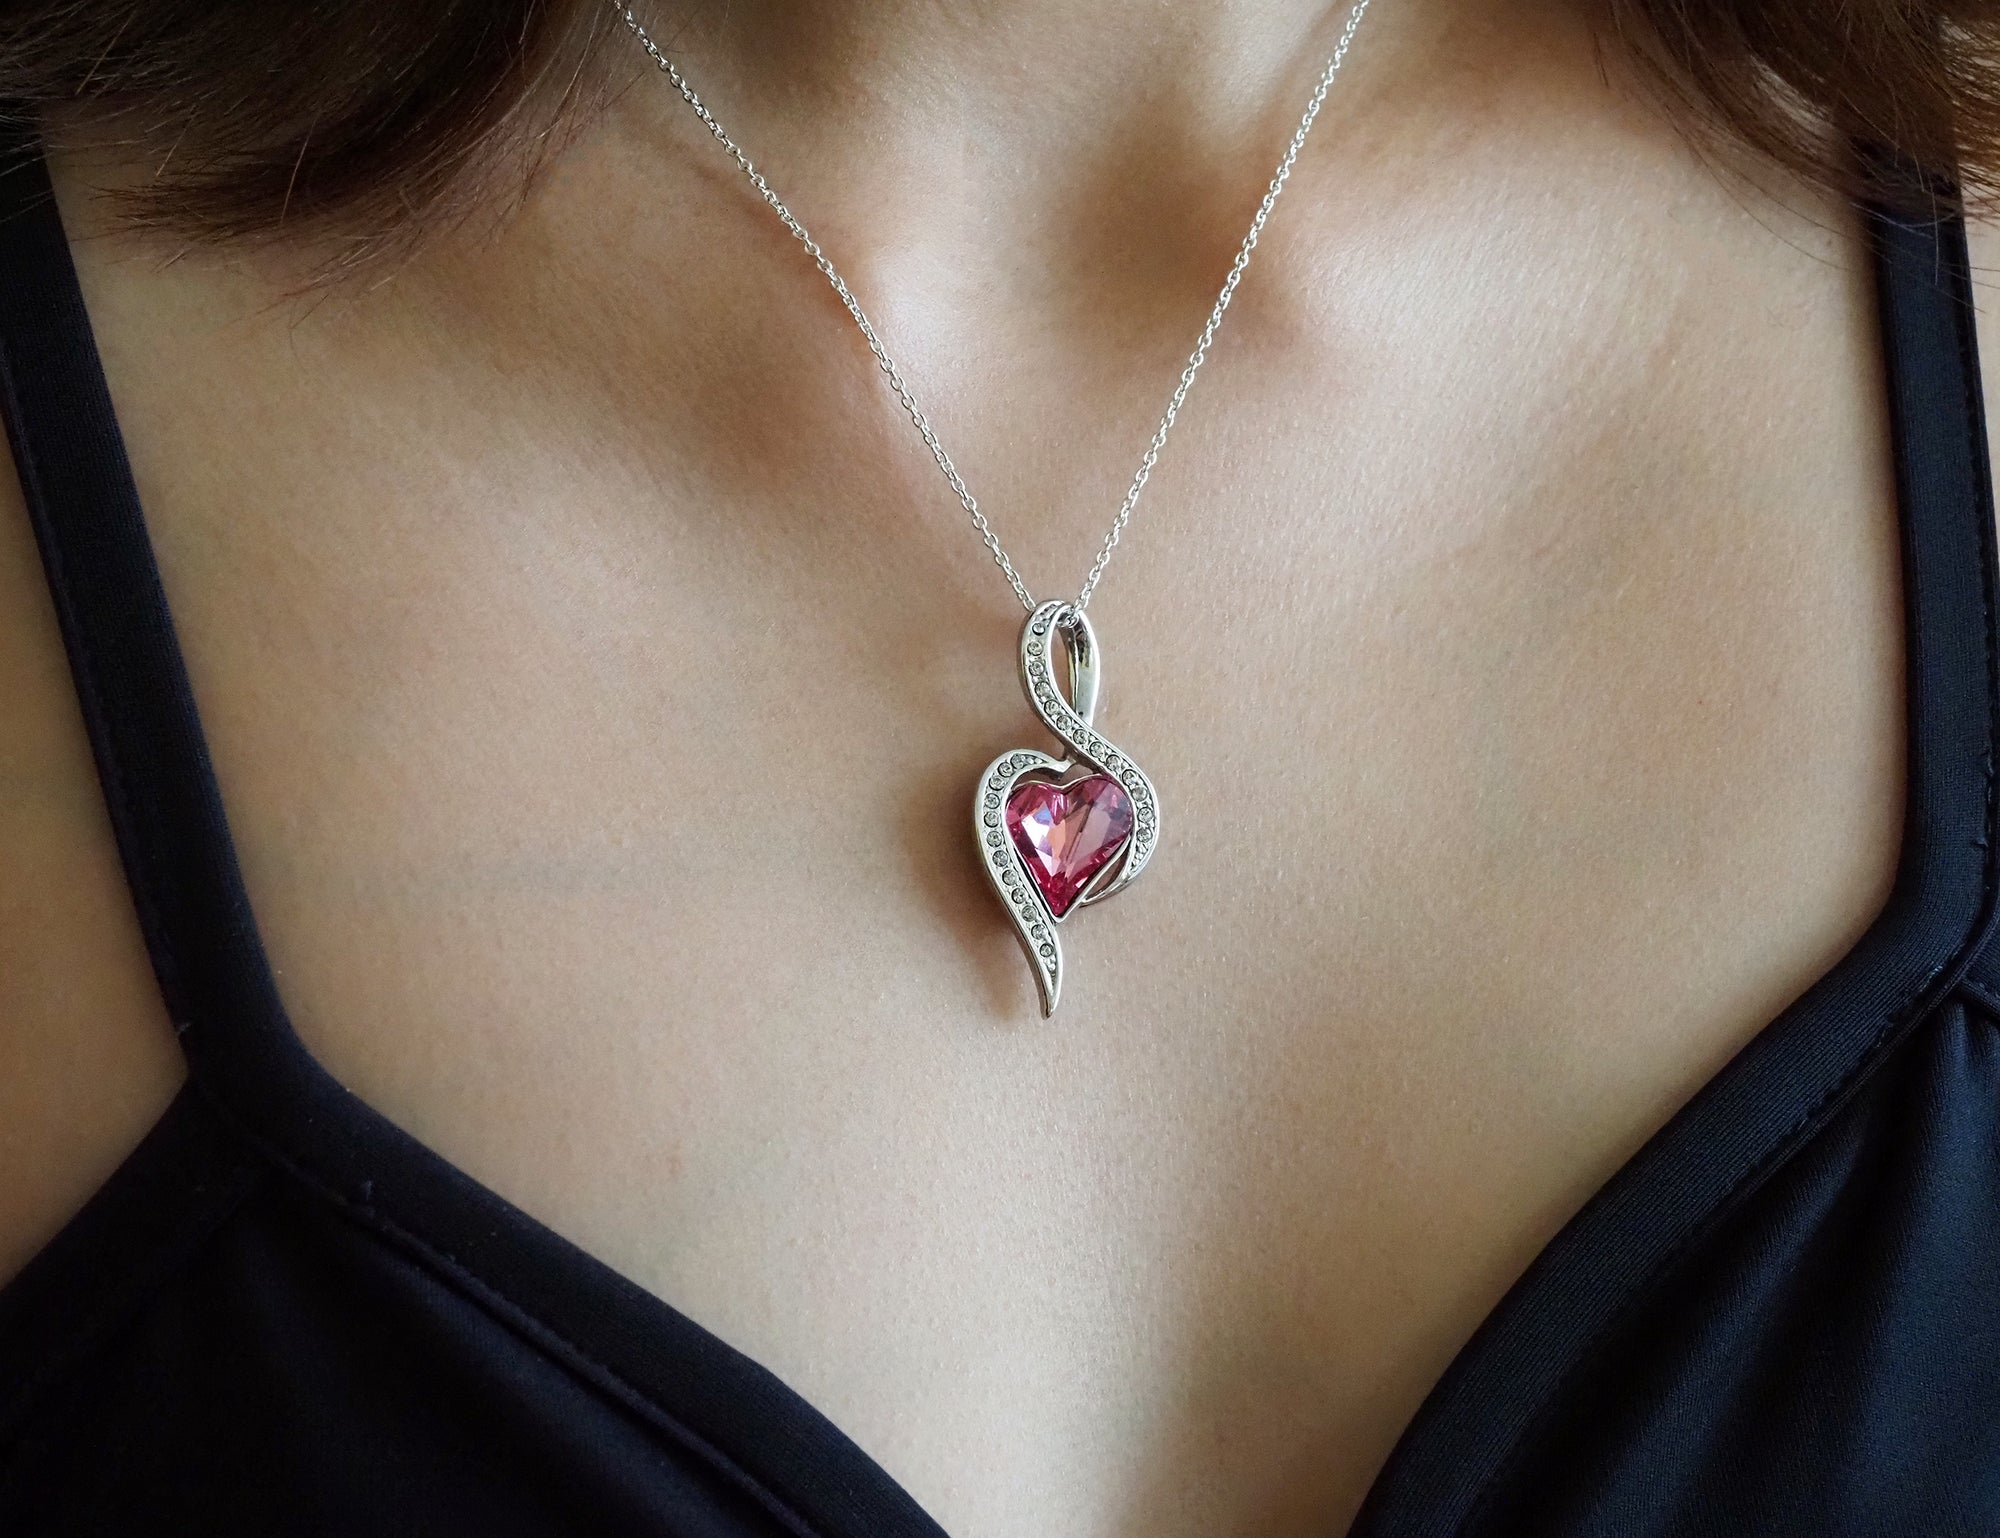 New Swarovski Gema 520 Pendant 5653009 Heart Pink Rhodium Plated Necklace  For Swarovski Necklace & Pendant Classic